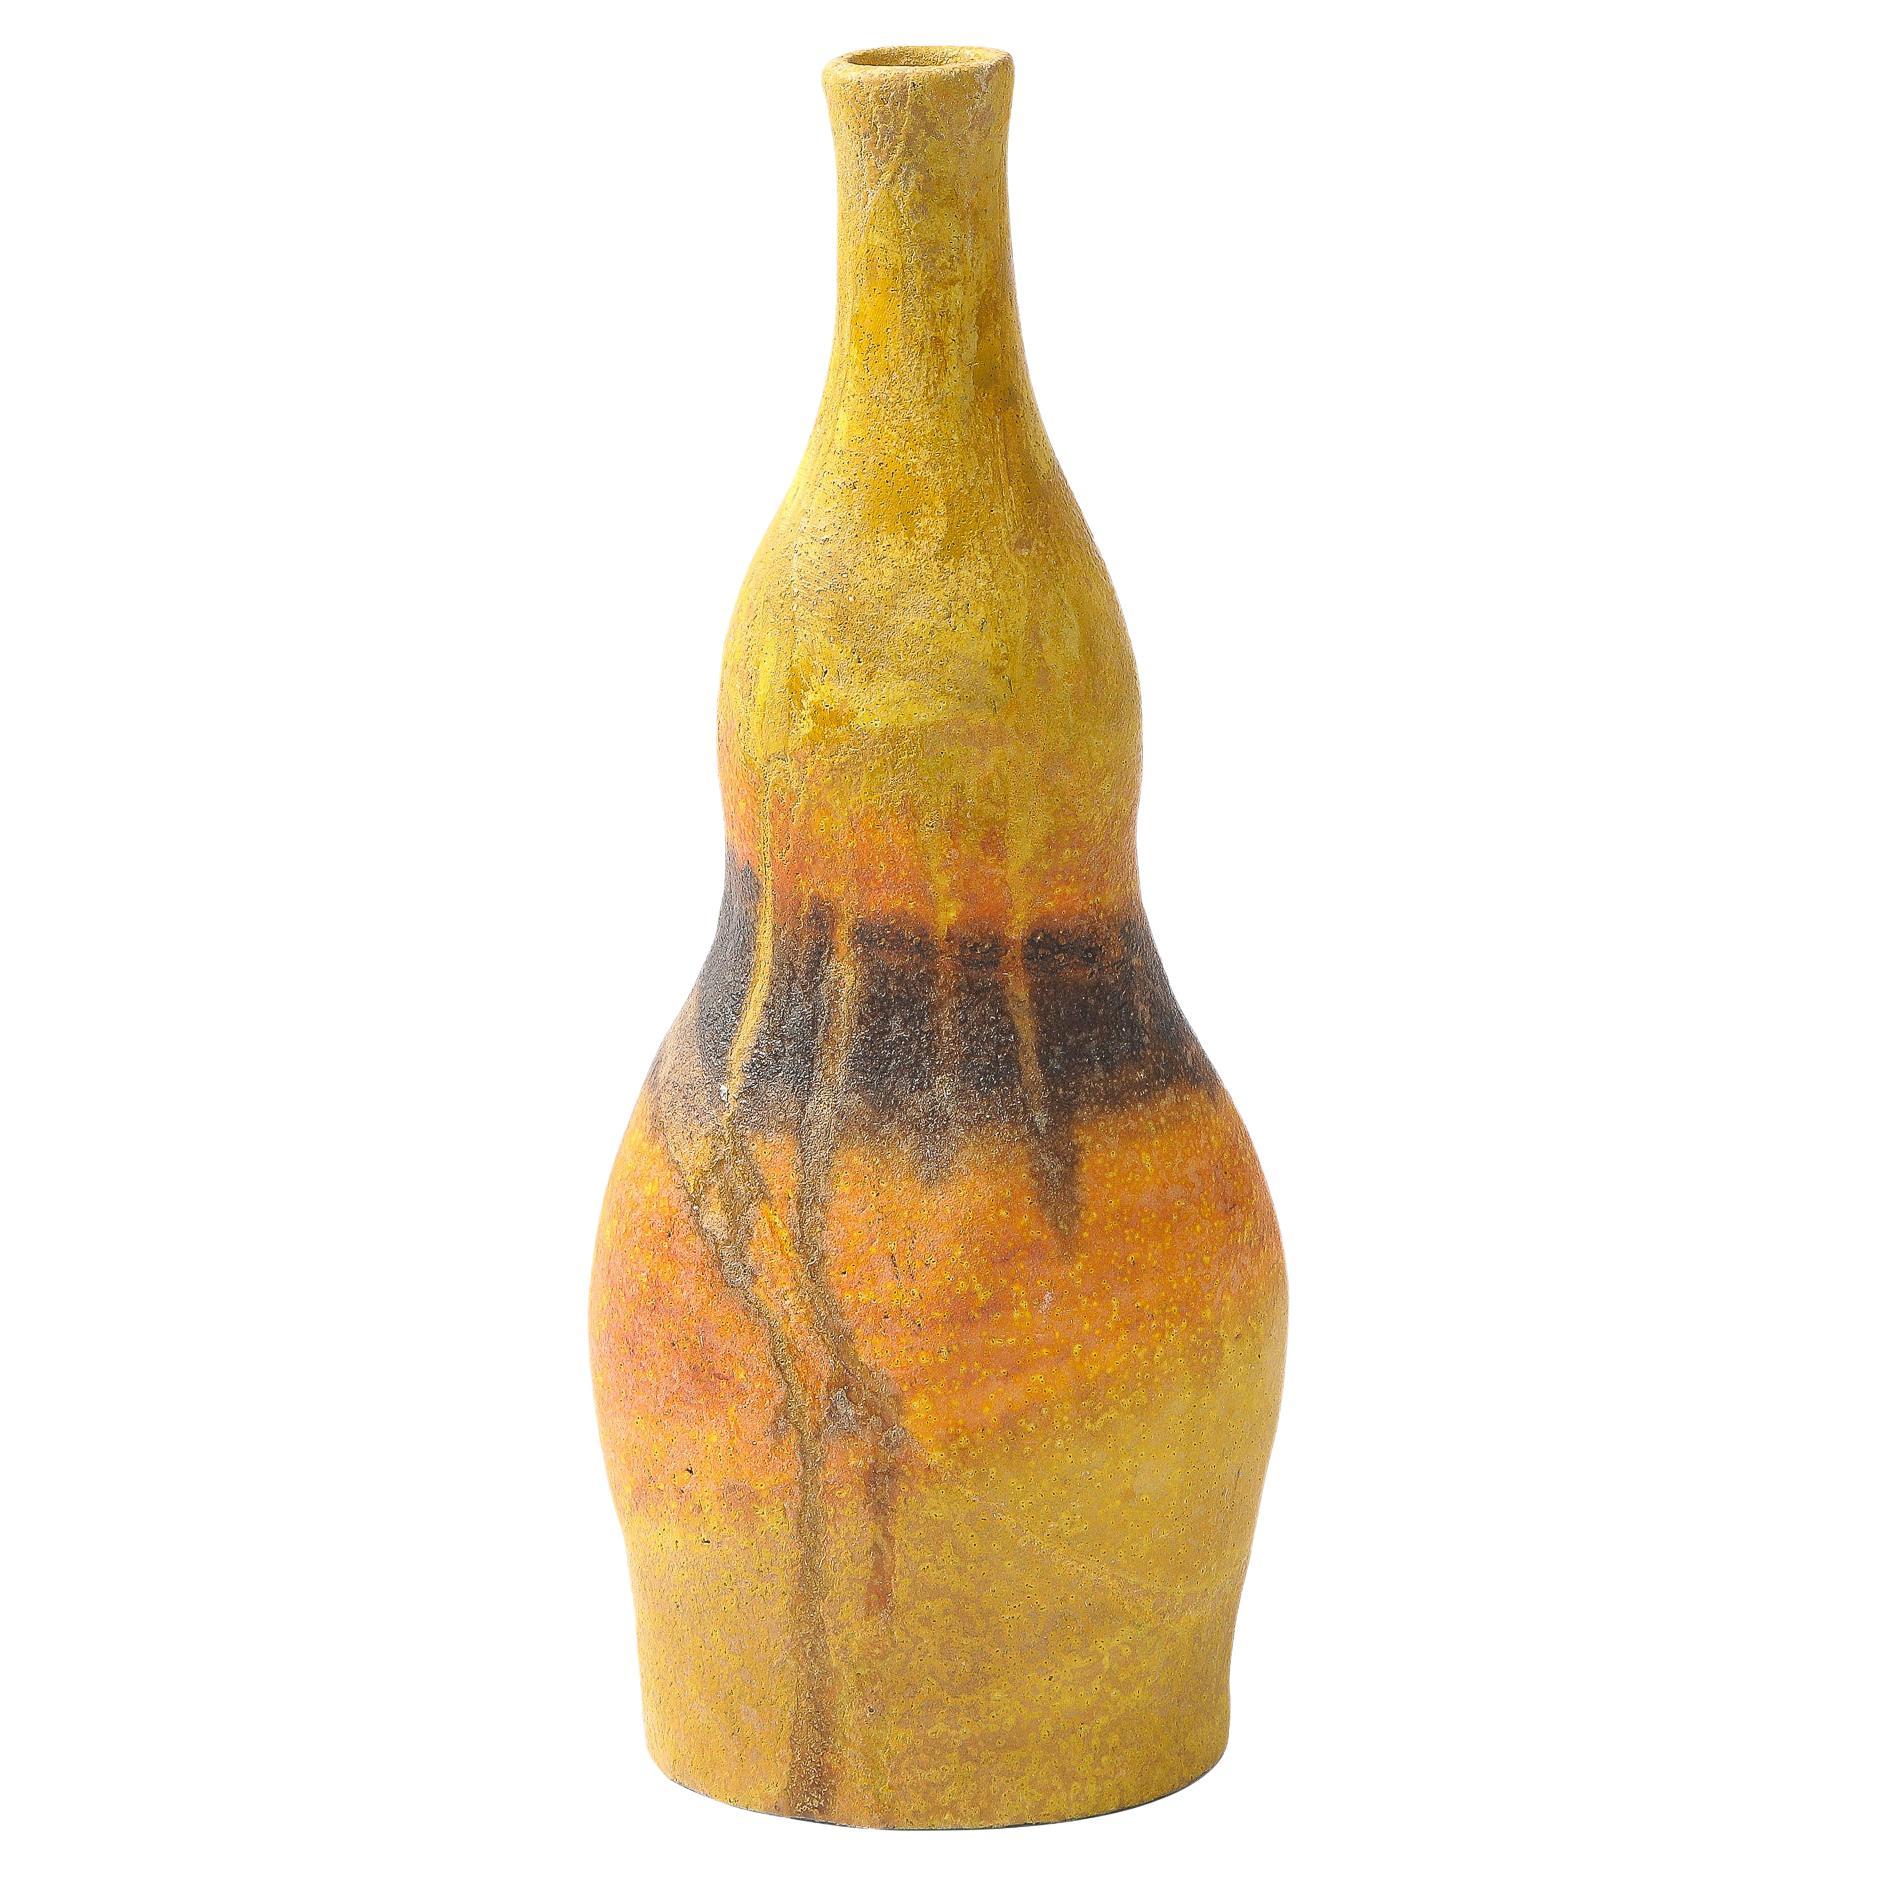 Mid-Century Modern Undulating Ceramic Vase in Sherbet Tones by Marcello Fantoni